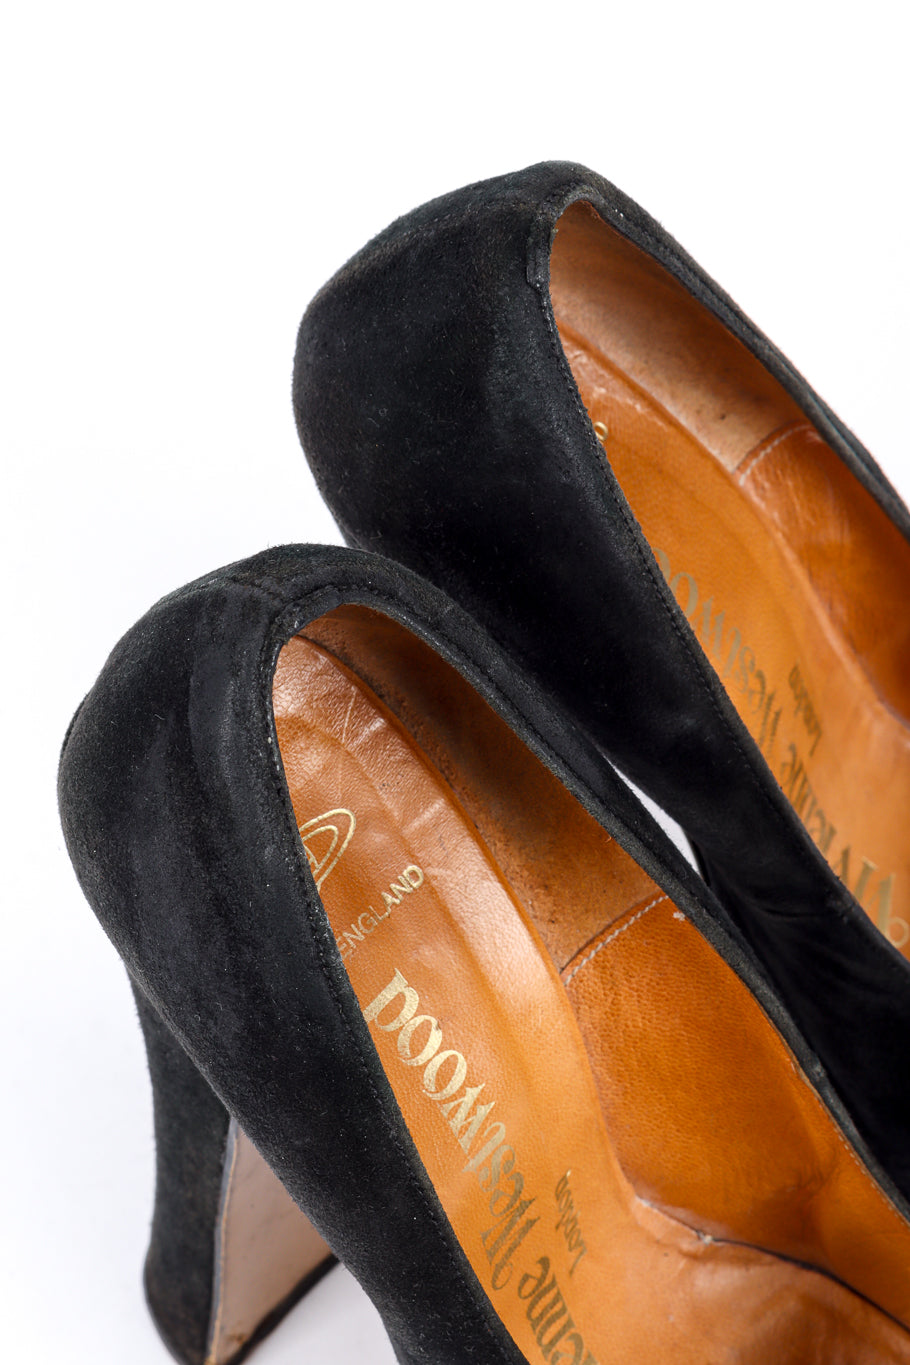 Vintage Vivienne Westwood 1993 F/W Elevated Suede Court Shoe heel counter closeup @recessla